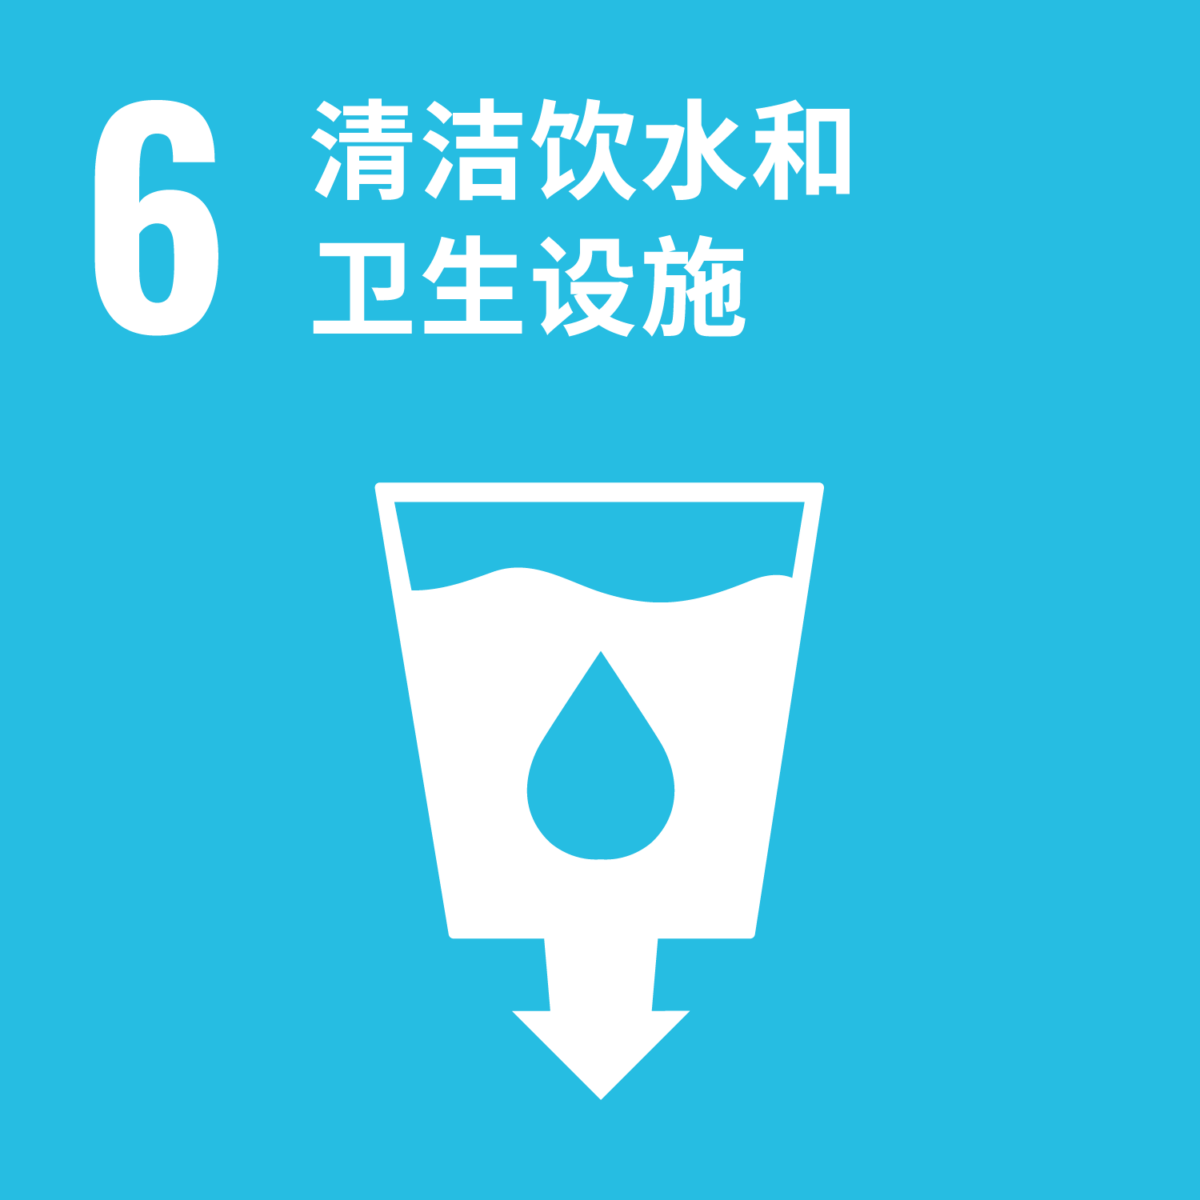 Logo Goals